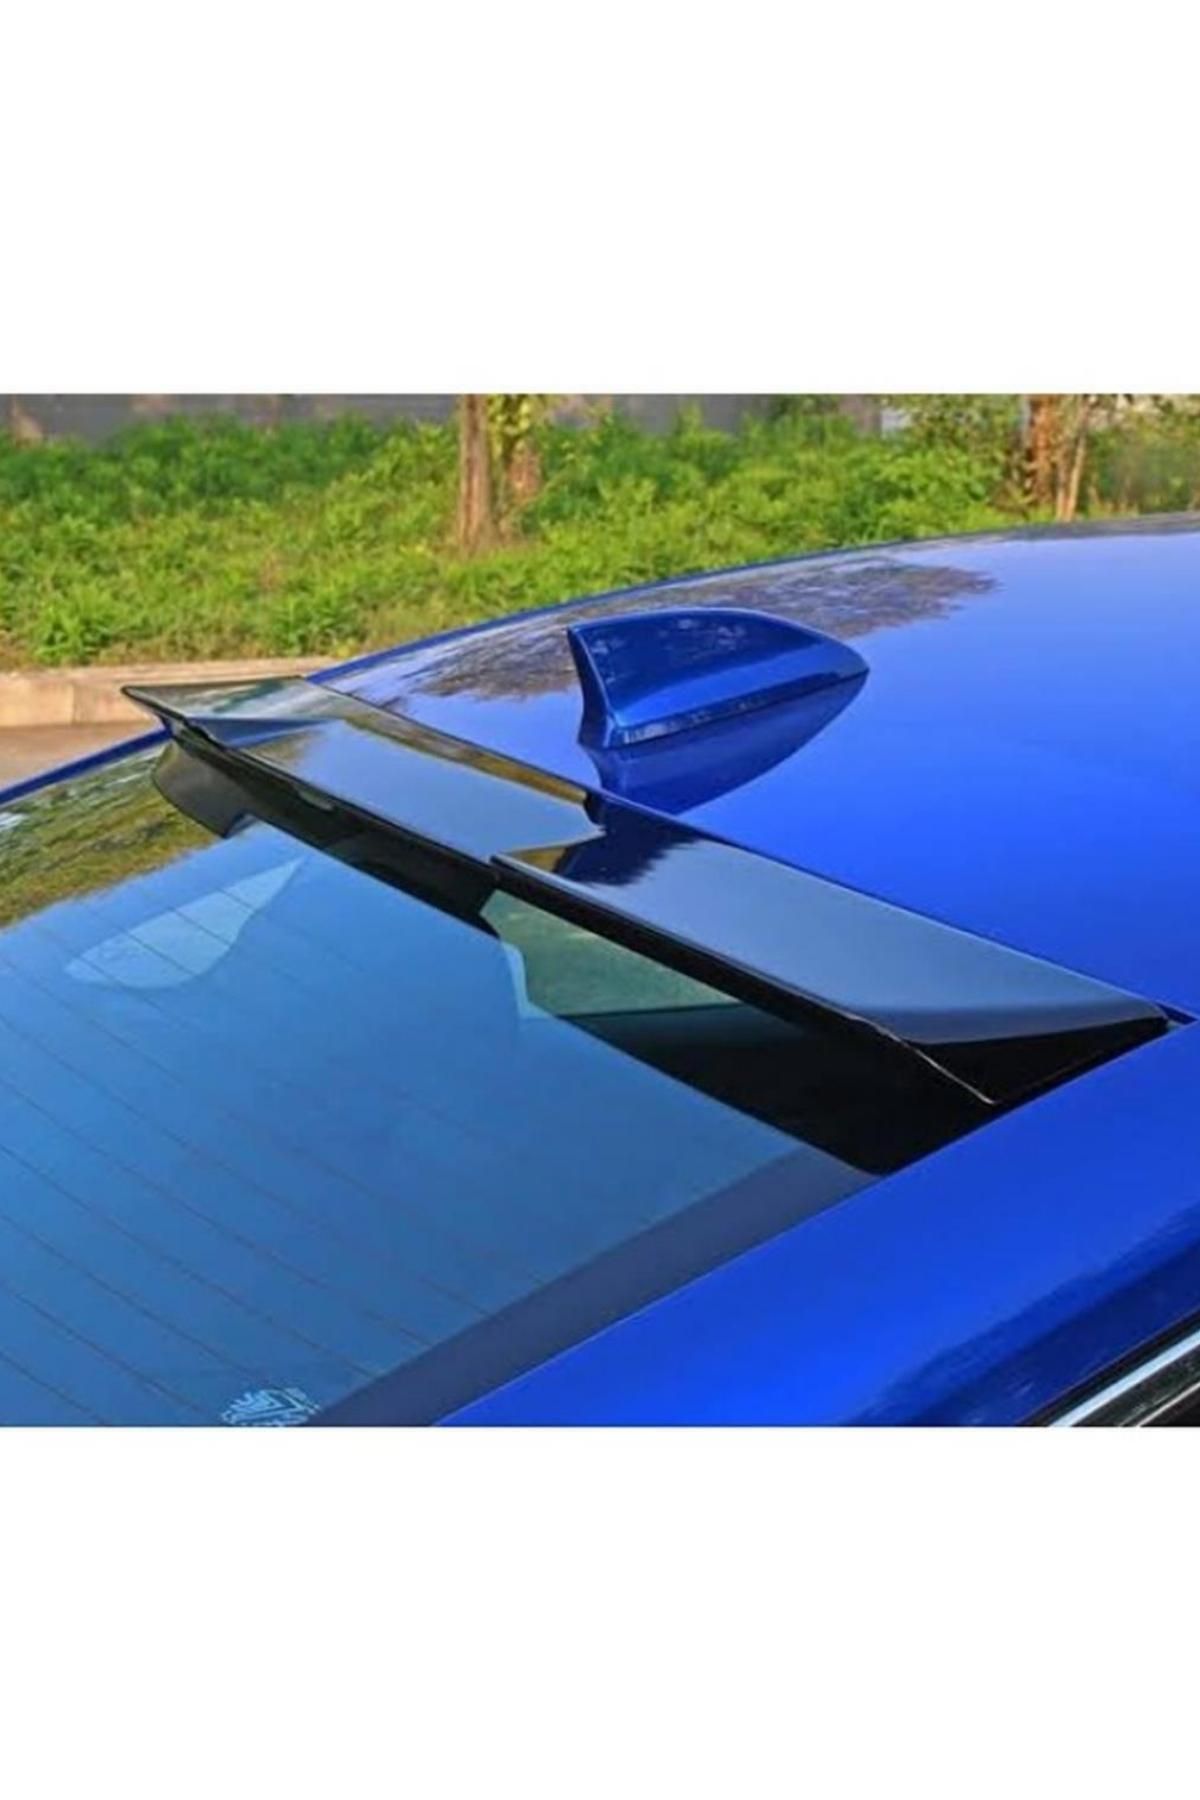 aksarabana Honda Civic Fe M4 Style Cam Üstü Spoiler Parlak Siyah (PİANO BLACK) Boyalı